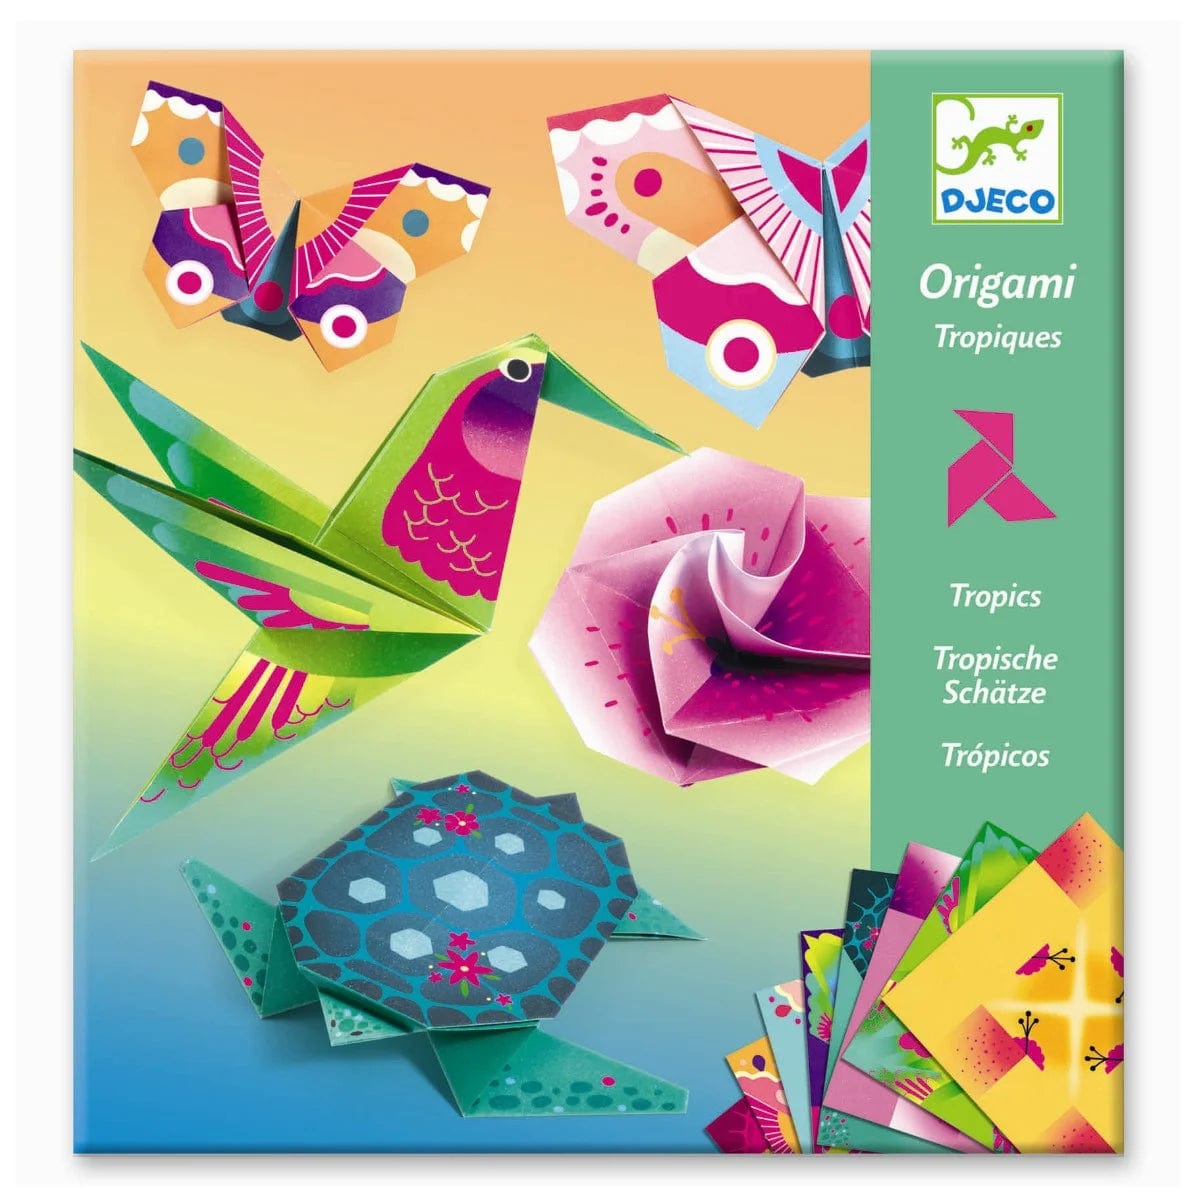 Djeco Aktivitetssæt Djeco Origami - Tropics